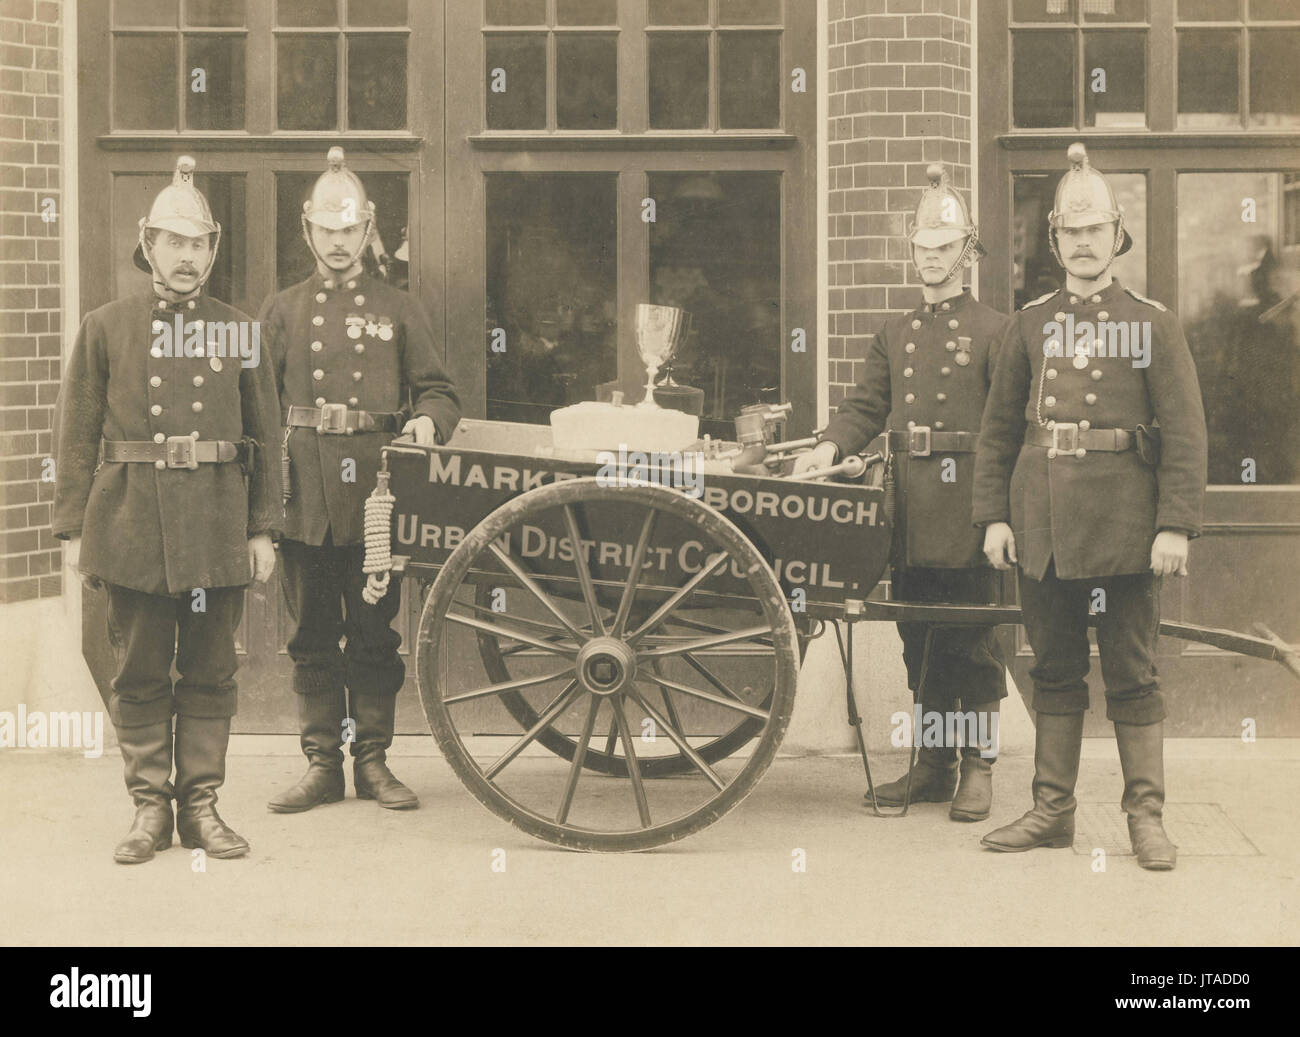 Market Harborough Fire brigade, Leicestershire, c1900s, historic archive photograph Stock Photo